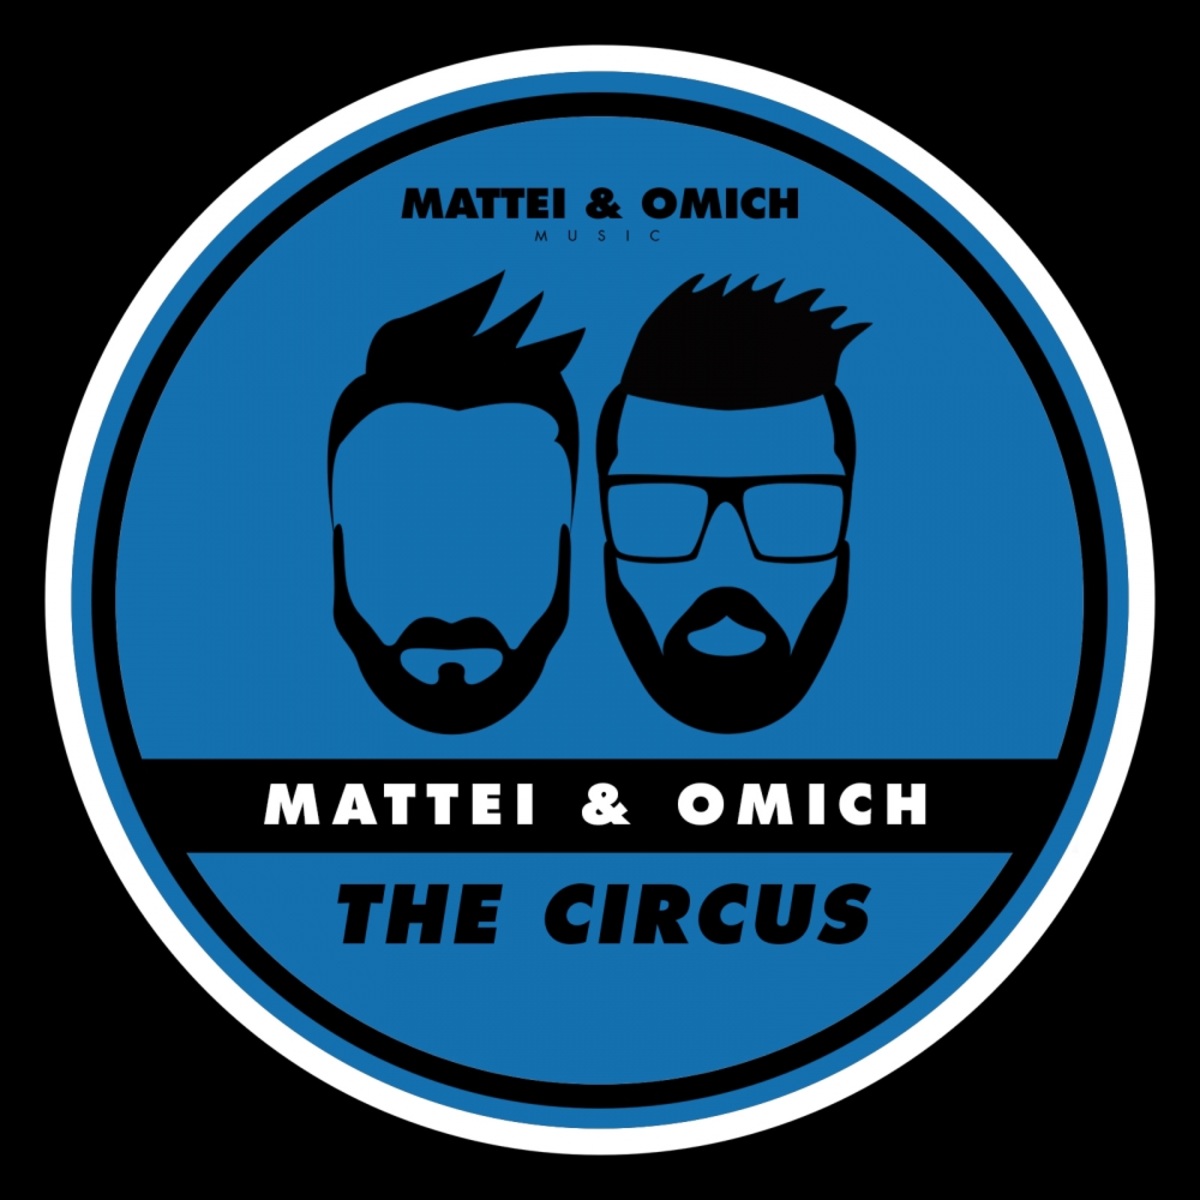 Mattei & Omich - The Circus / Mattei & Omich Music